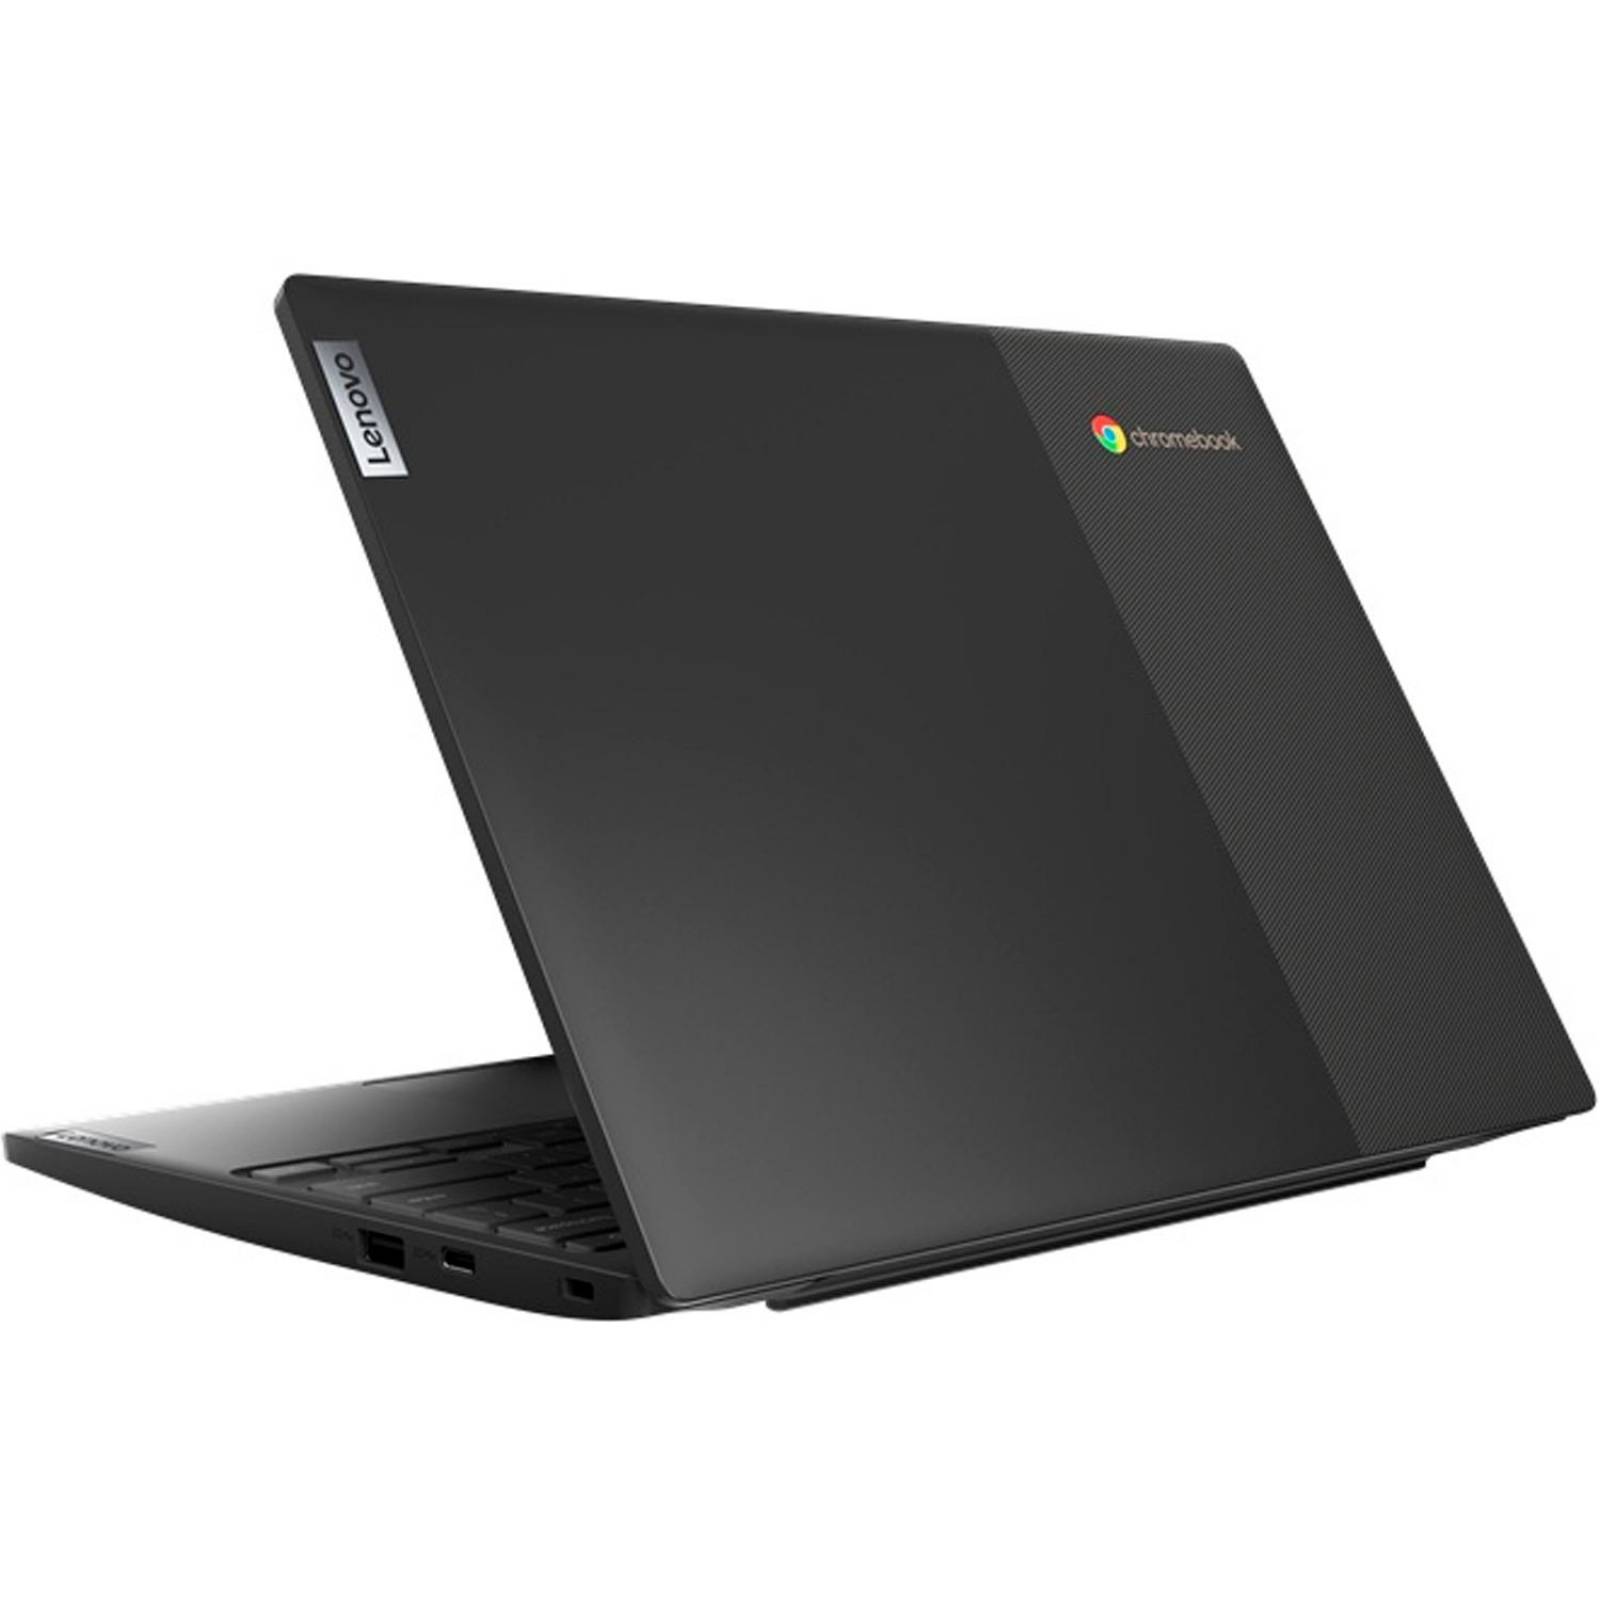 Laptop LENOVO CHROMEBOOK Intel Dual Core N4020 4GB SSD 32GB Pantalla 11.6 WIFI 